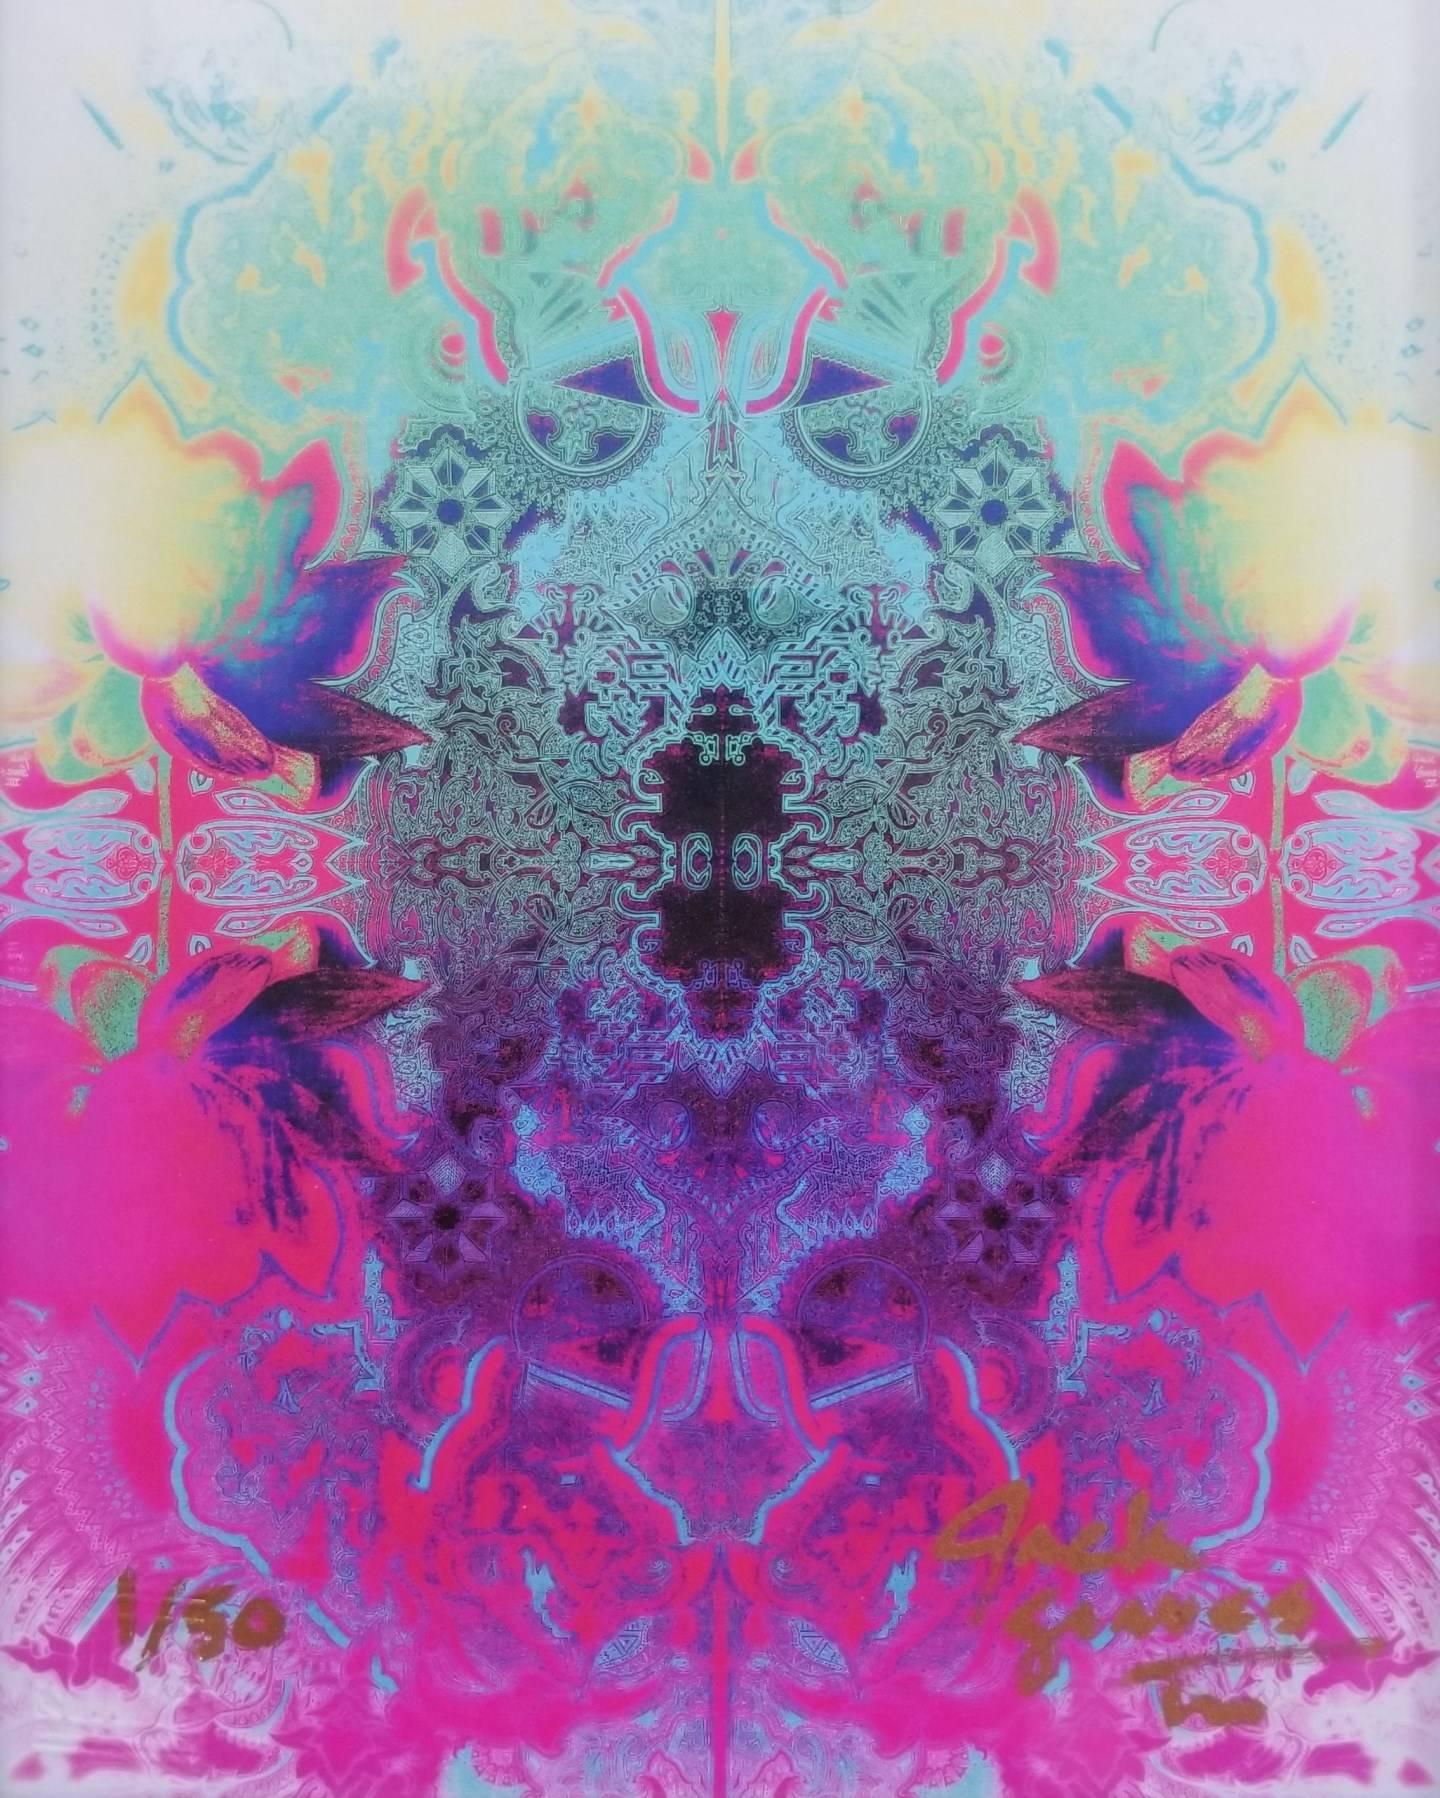 Jack Graves III Abstract Print - Lotus Flower